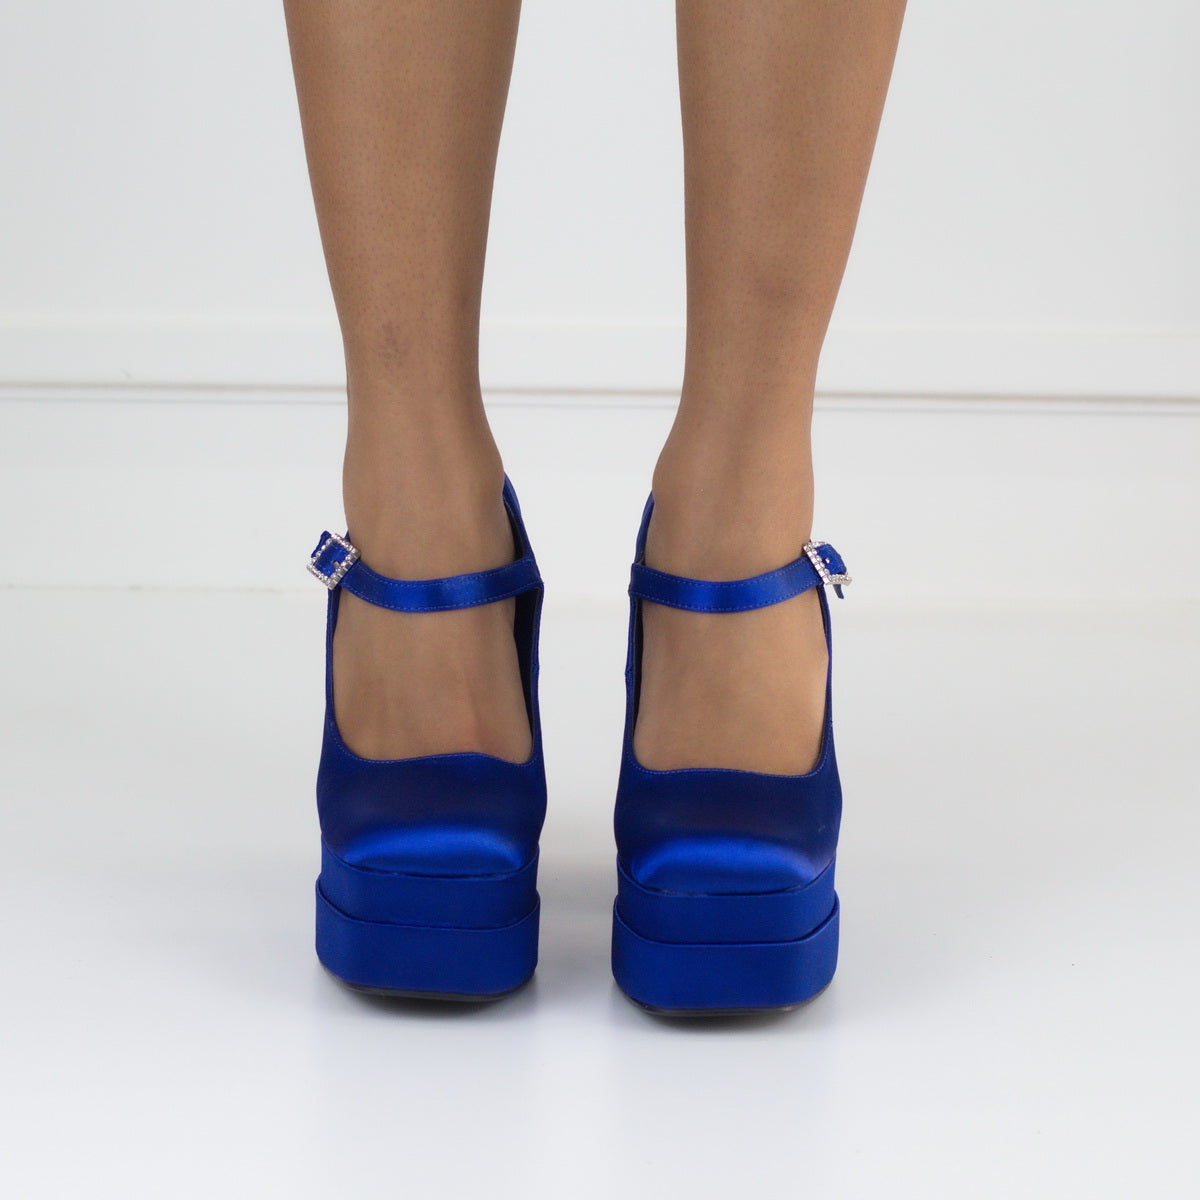 Pippa 14.5cm platform heel Funky ankle strap pump royal blue